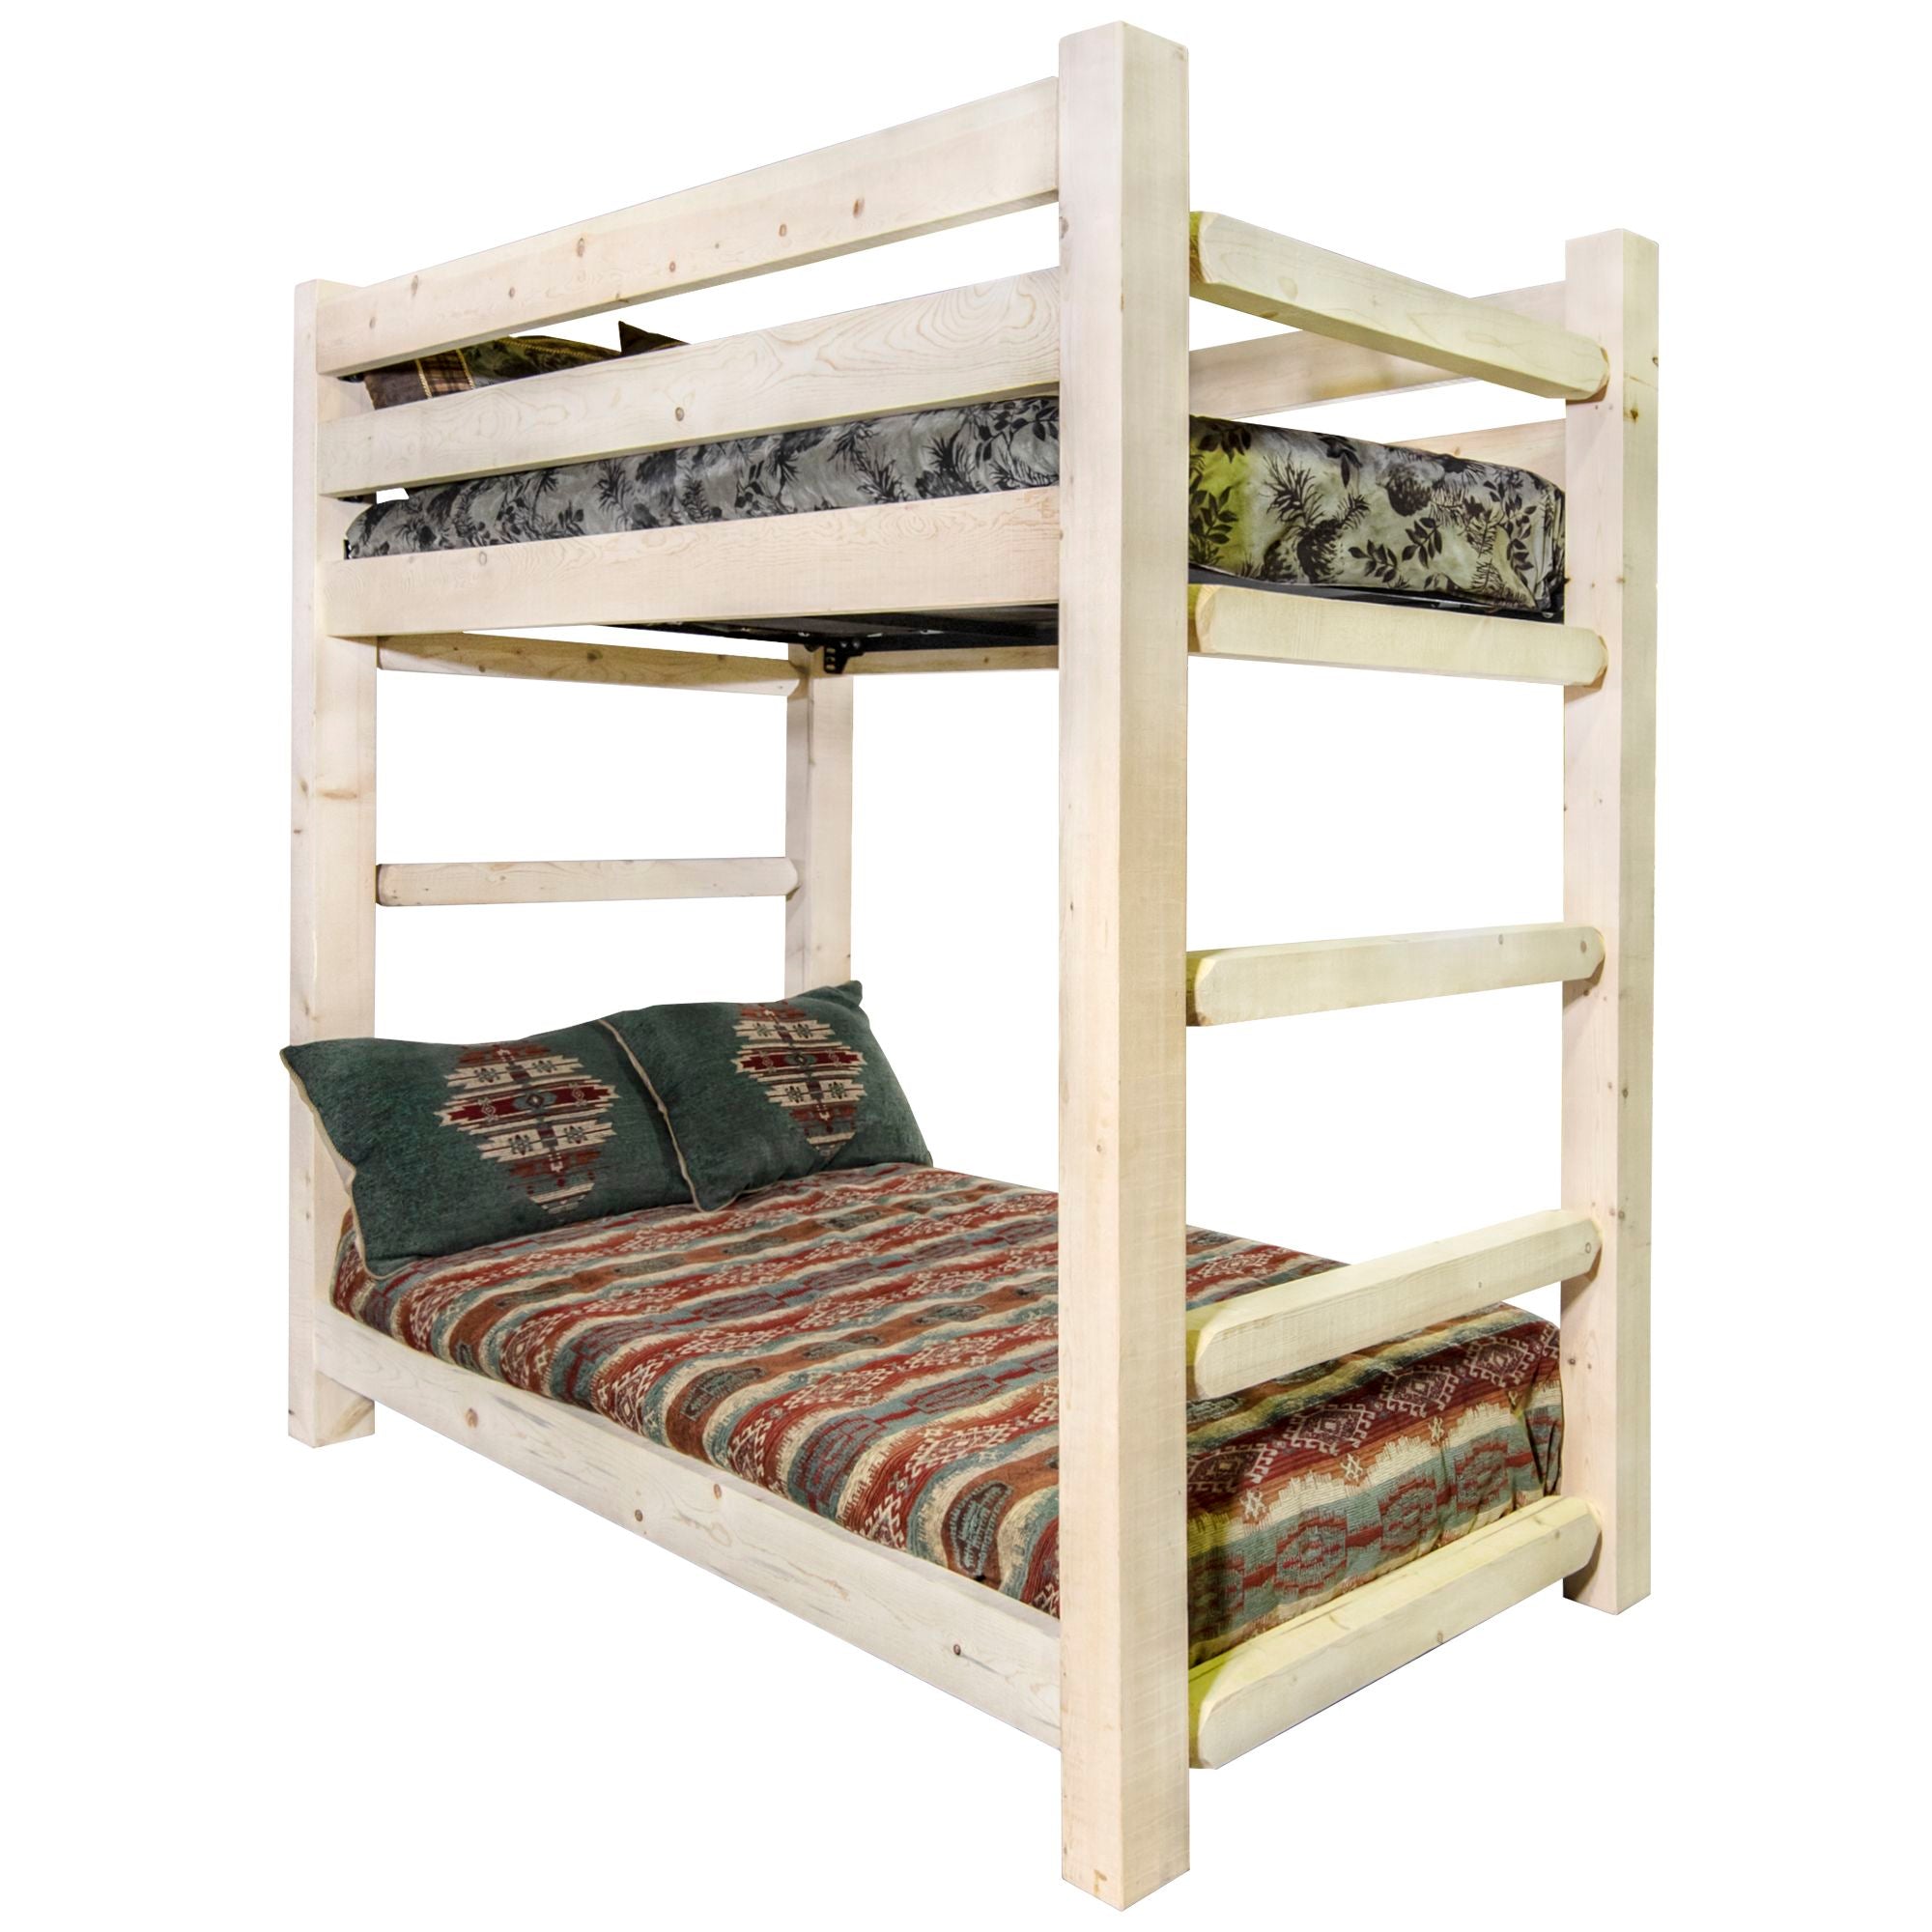 Homestead Rustic Bunk Bed Best Rustic Furniture